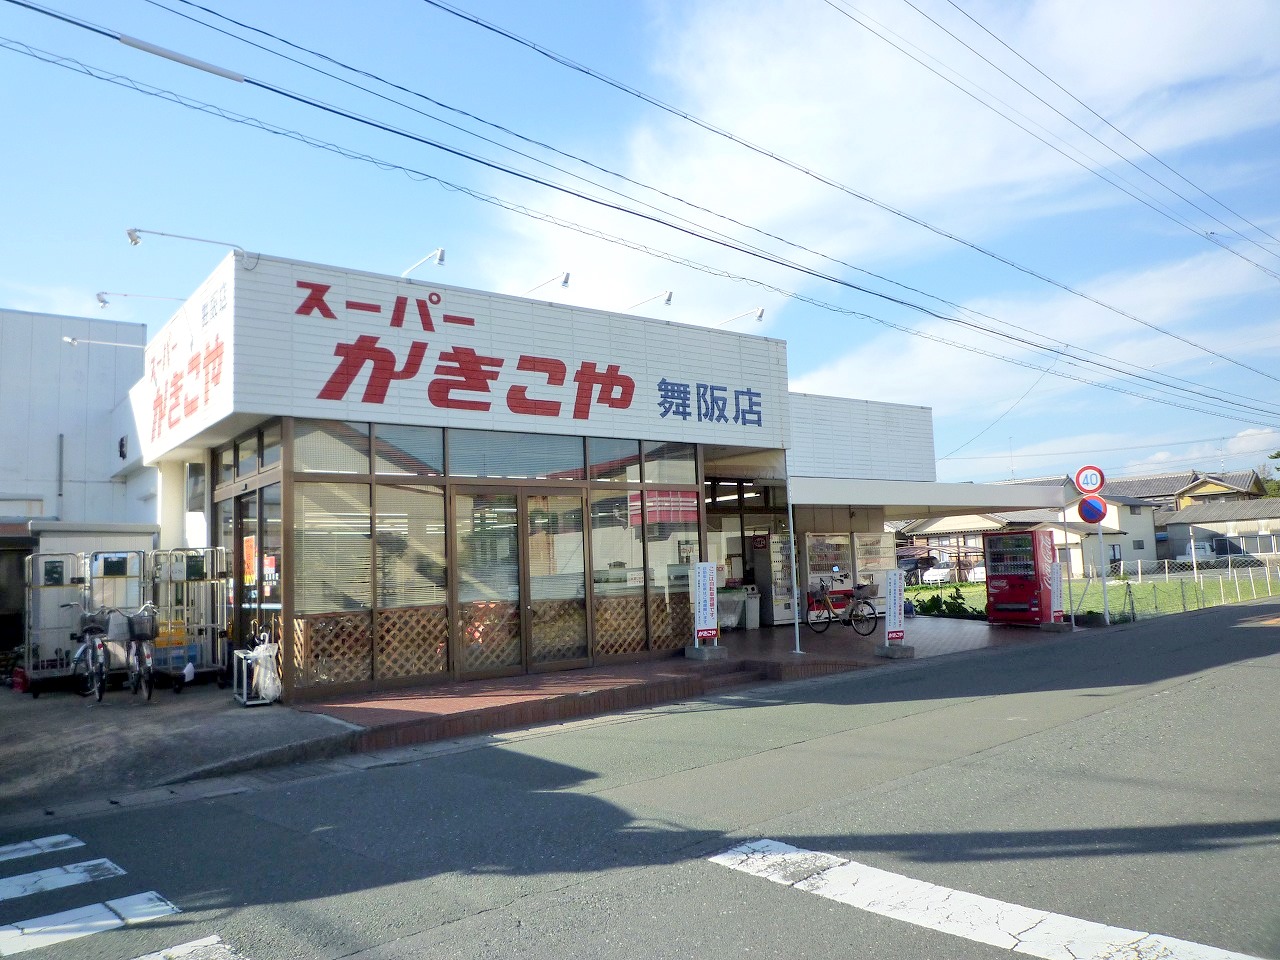 Supermarket. Kakiko and Maisaka store up to (super) 347m